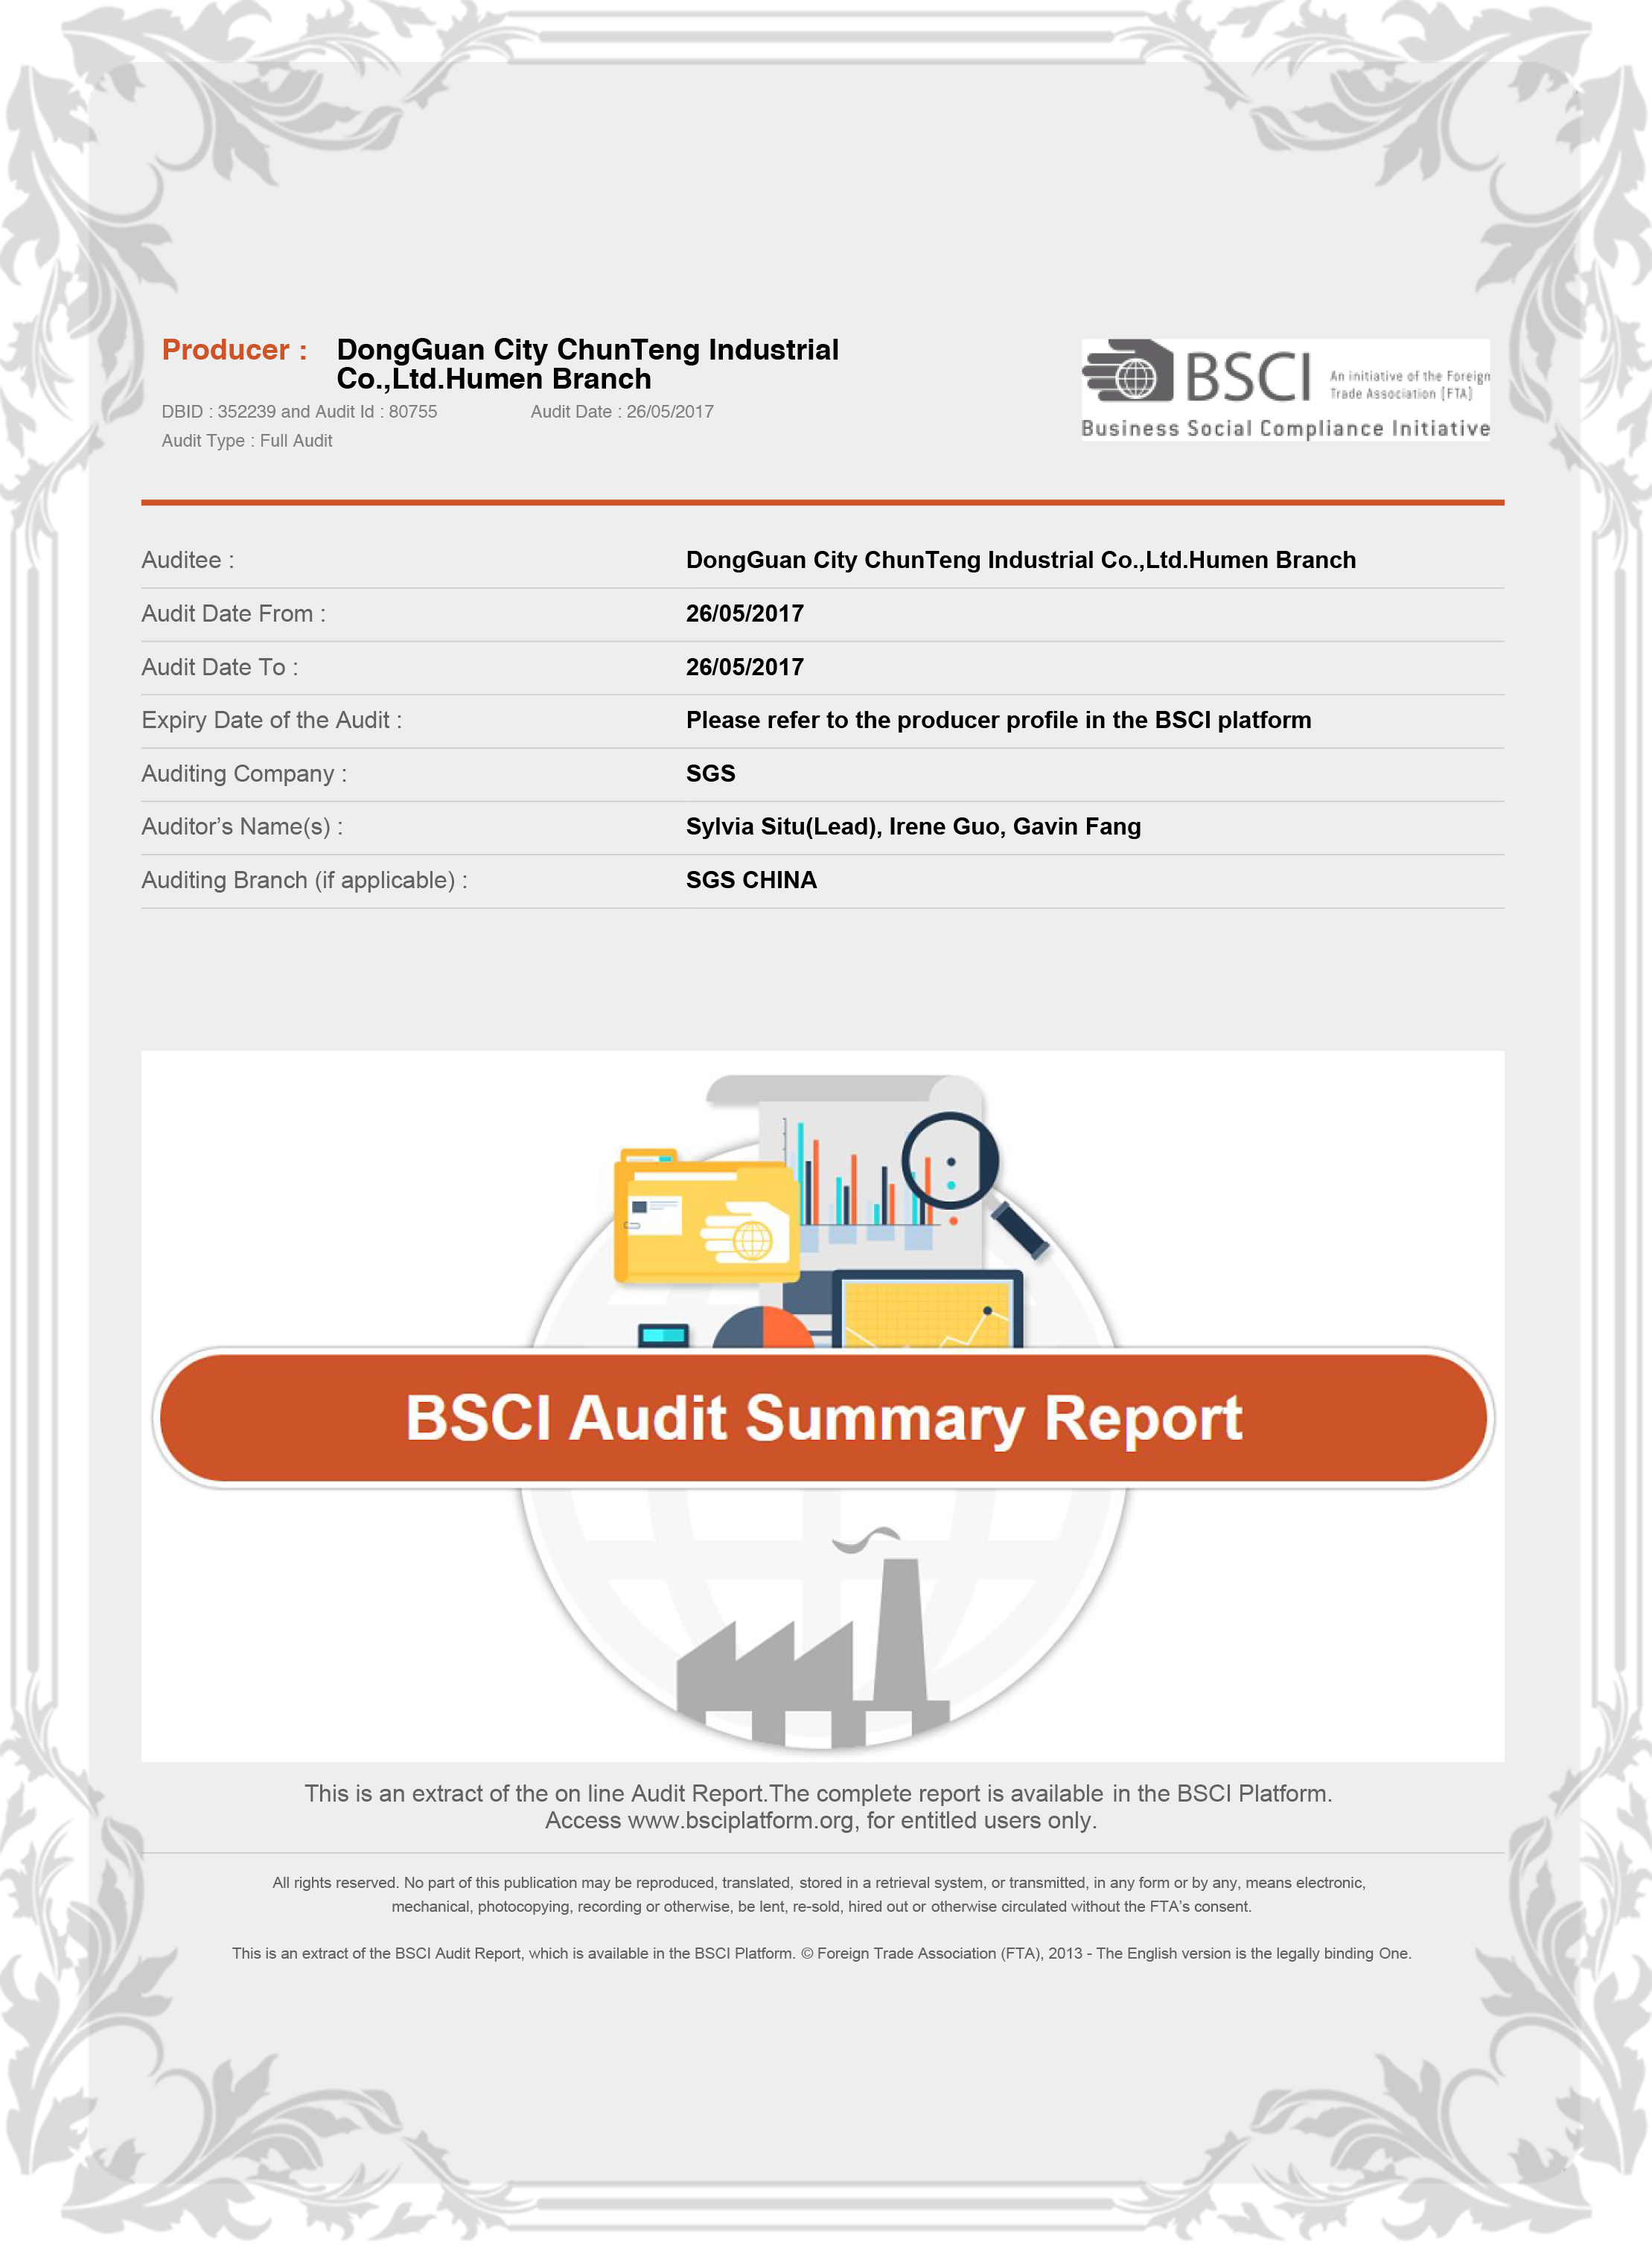 BSCI Certification